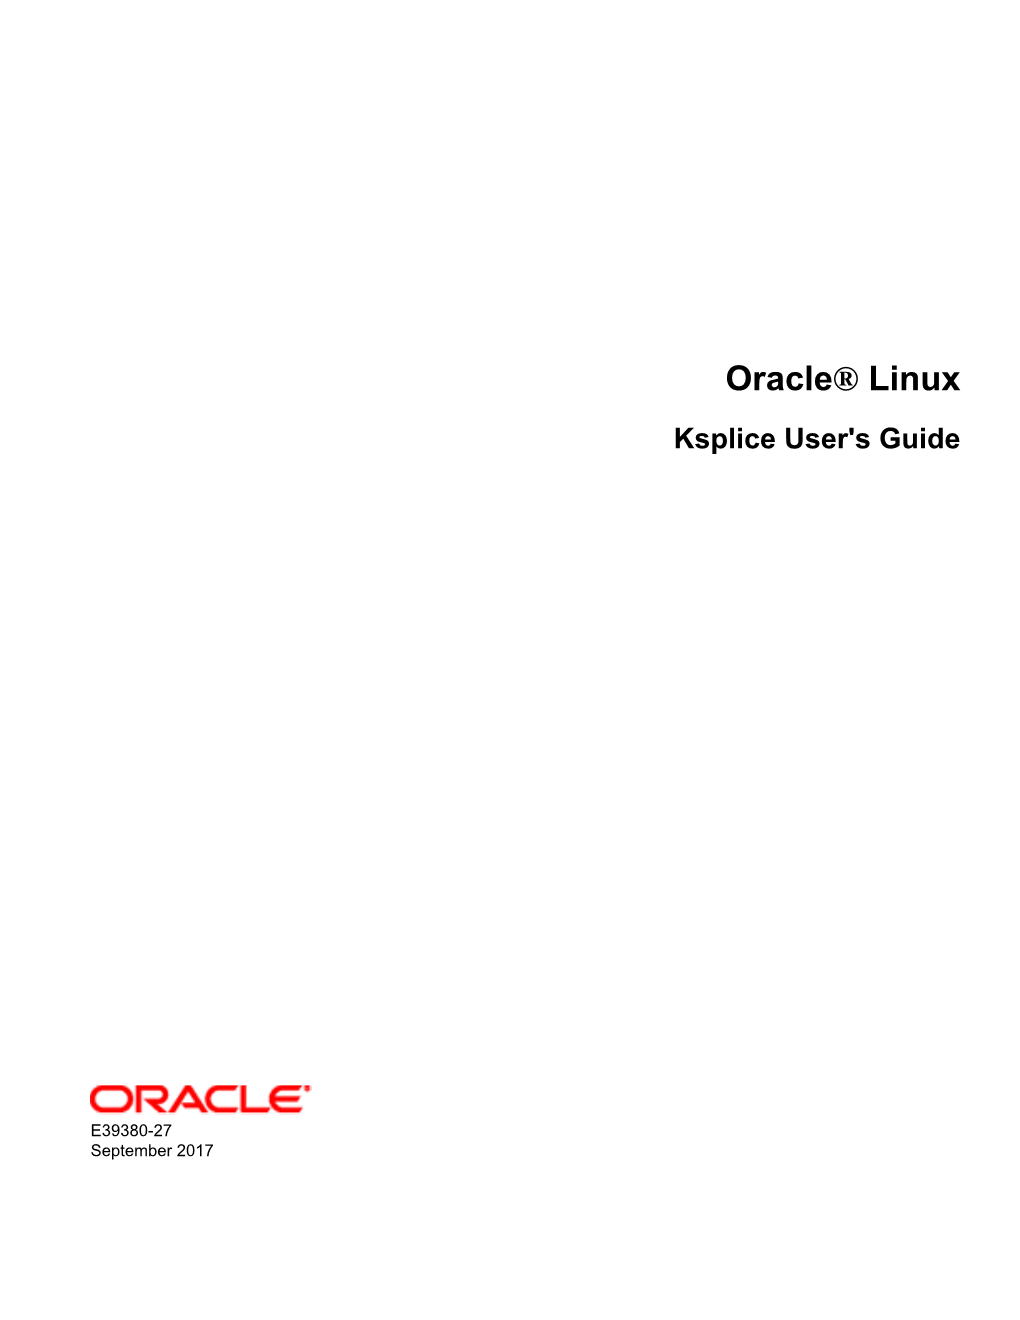 Oracle® Linux Ksplice User's Guide